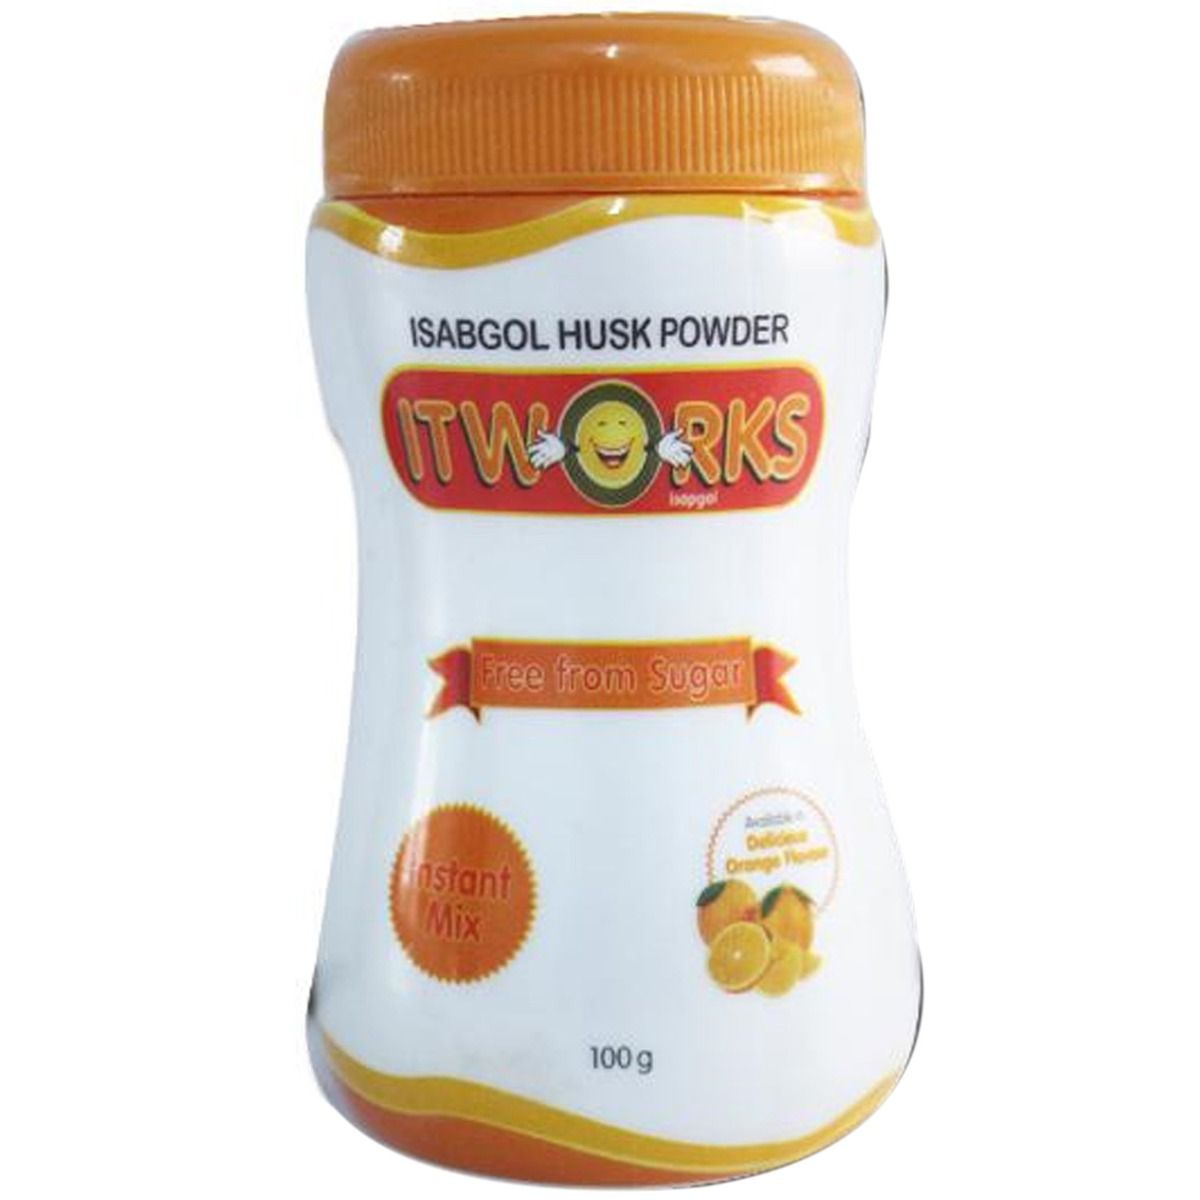 Itworks Orange Flavour Isabgol Husk Powder, 100 gm Jar, Pack of 1 